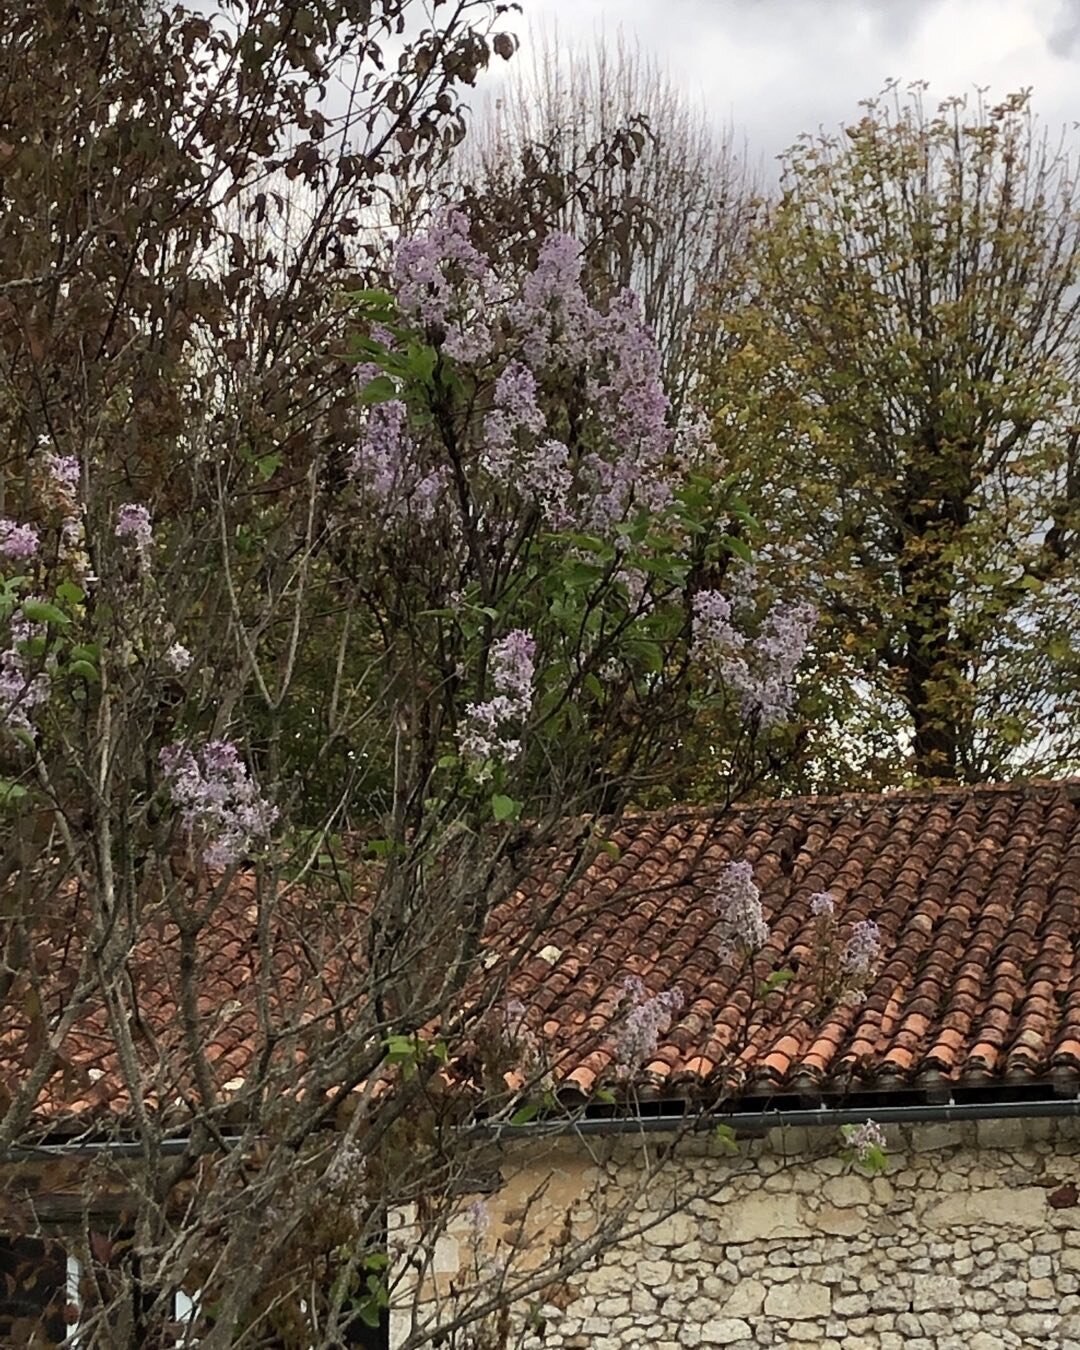 4 November in SW France and lilac is flowering. Bonkers. 

#bonkersfloweringlilac #gardening #frenchgardens